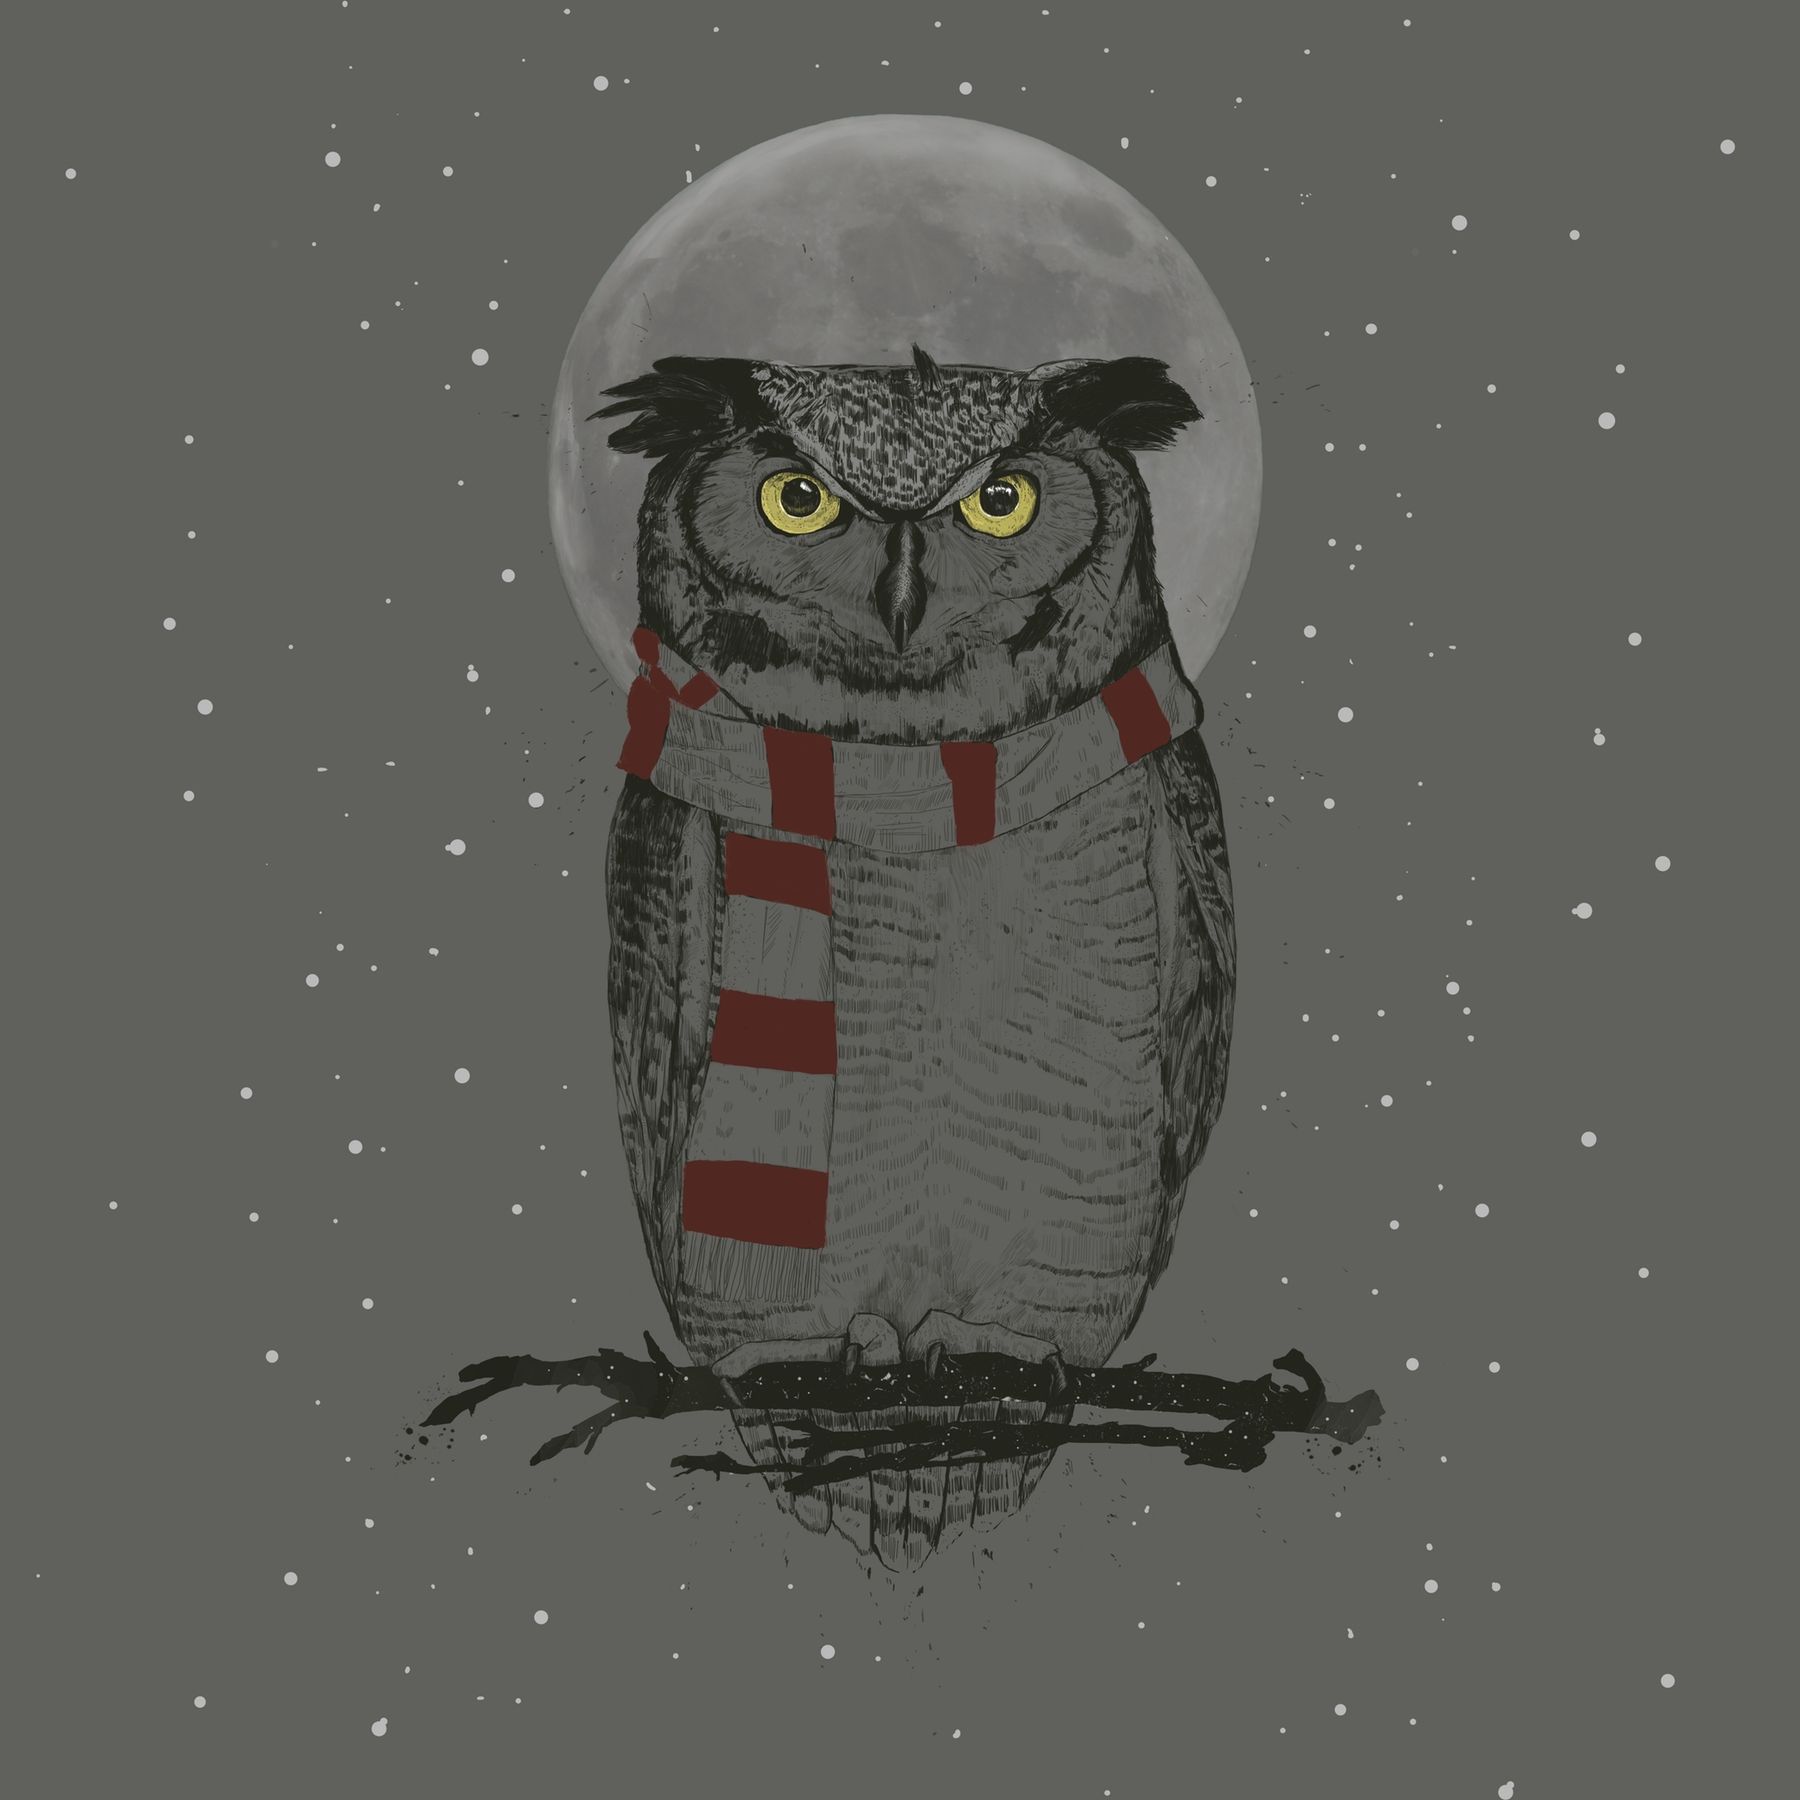 Buy Winter owl wallpaper US shipping at Happywall.com